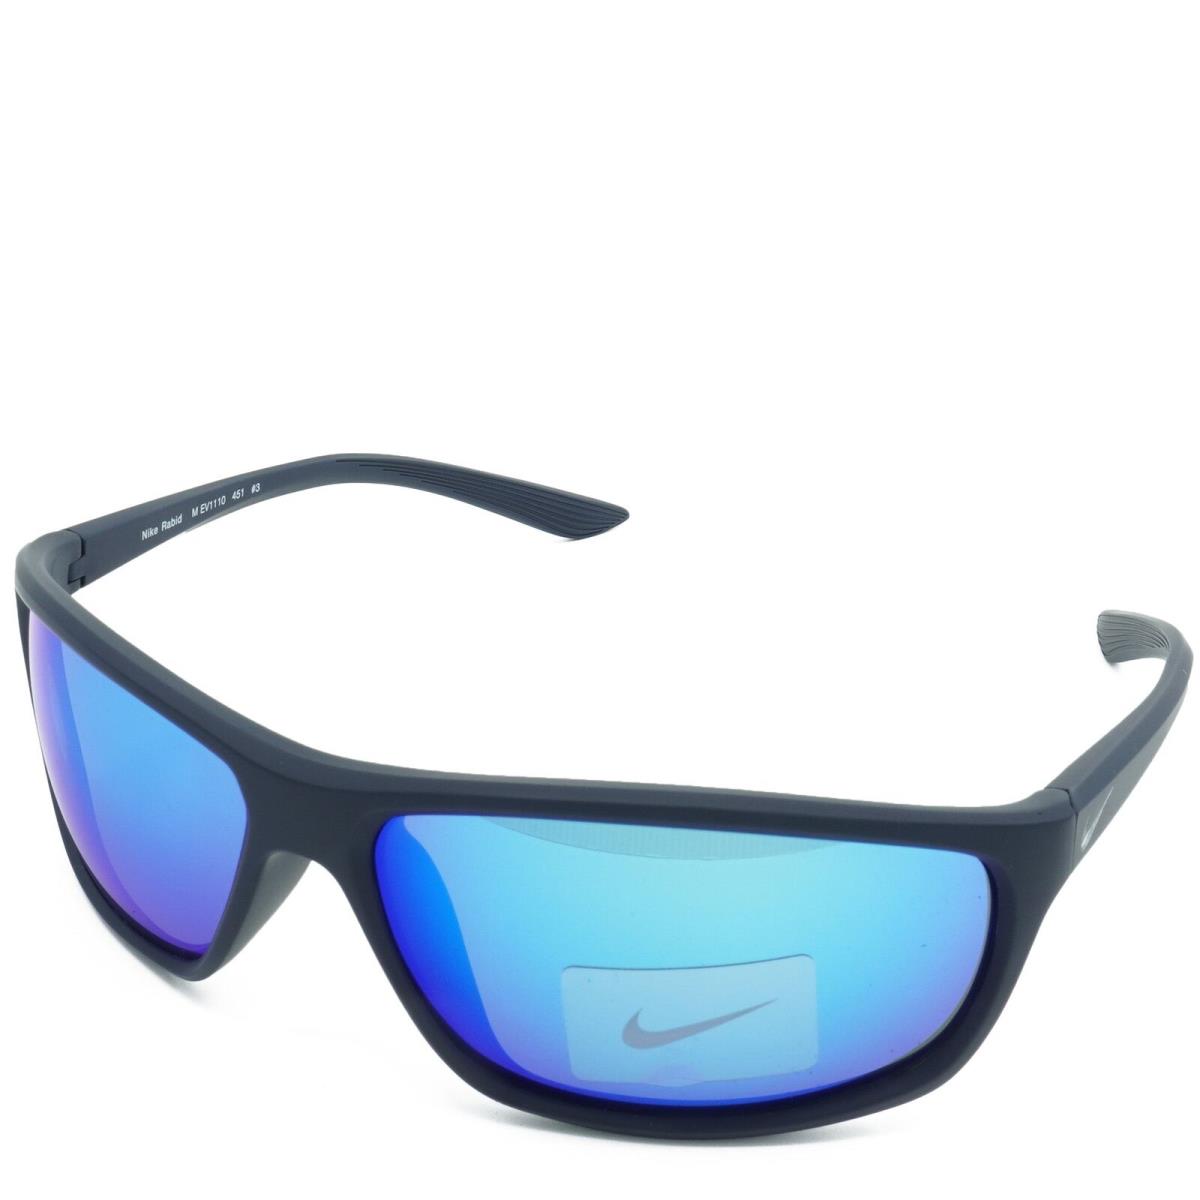 EV1110-451 Mens Nike Rabid M Sunglasses - Frame: MATTE OBSIDIAN BLUE